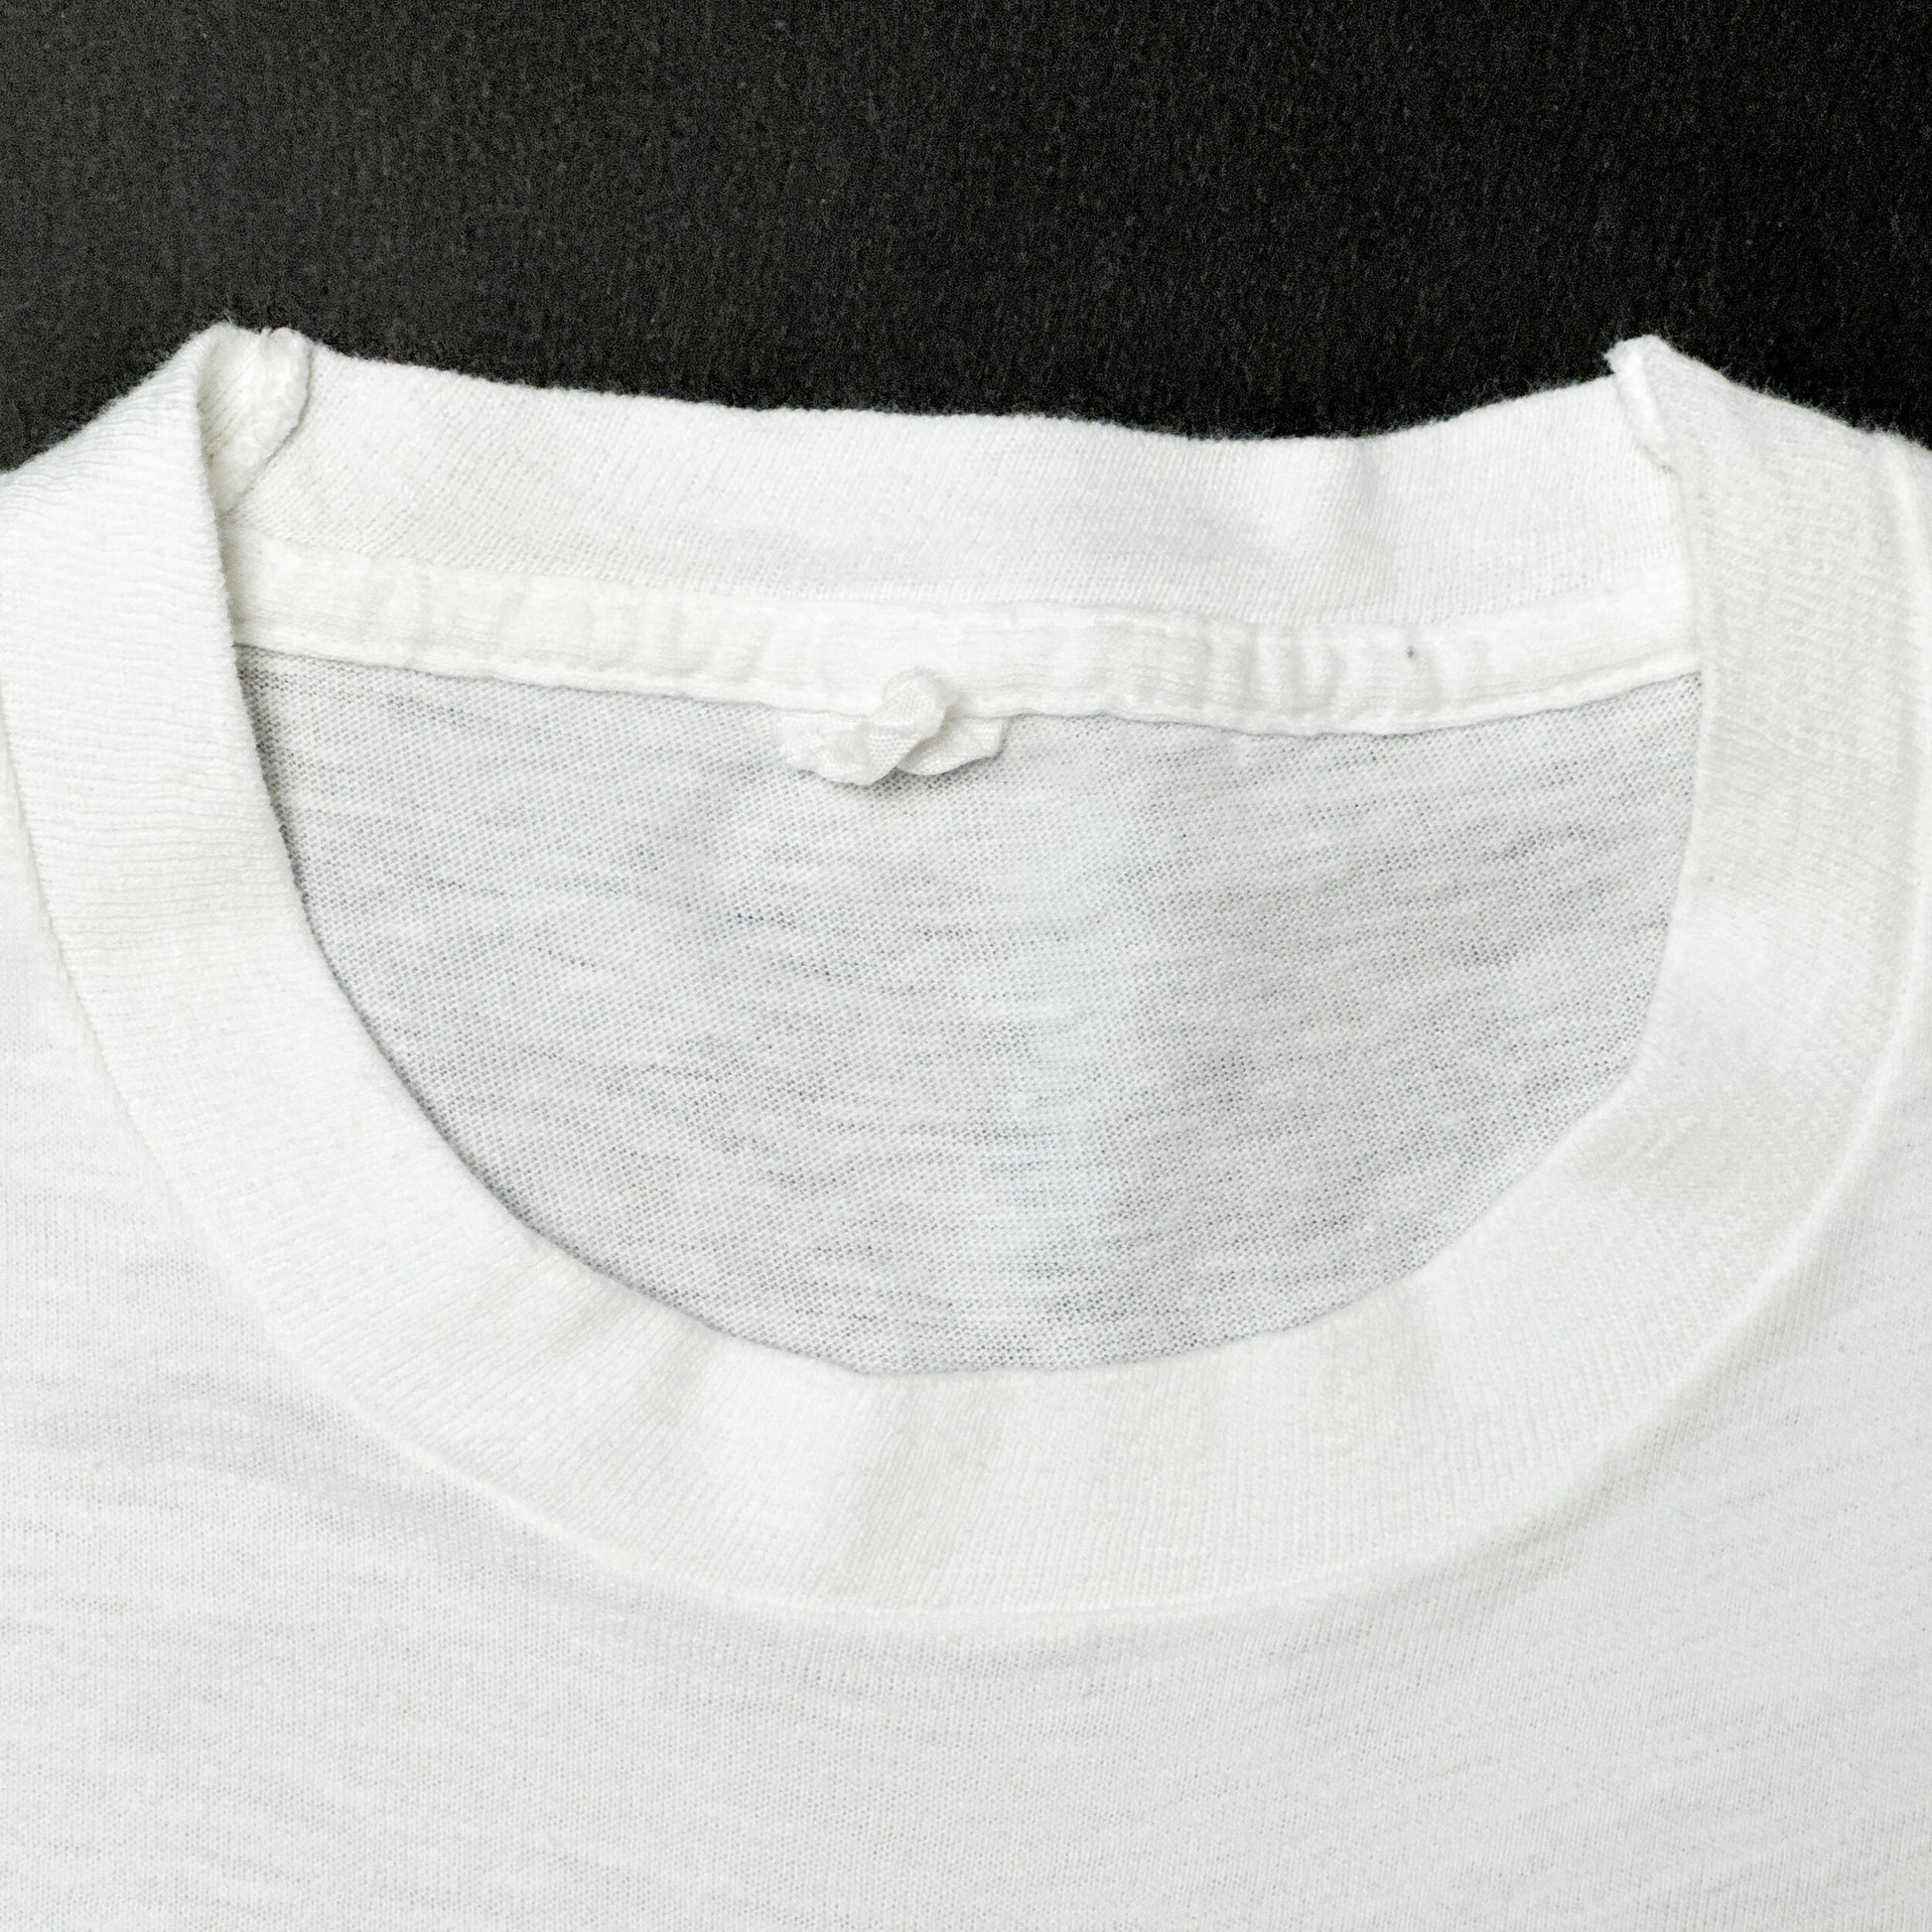 Medium 1978 Frank Sinatra On Tour T Shirt | Vintage 70s White Iron On Graphic Music Tee